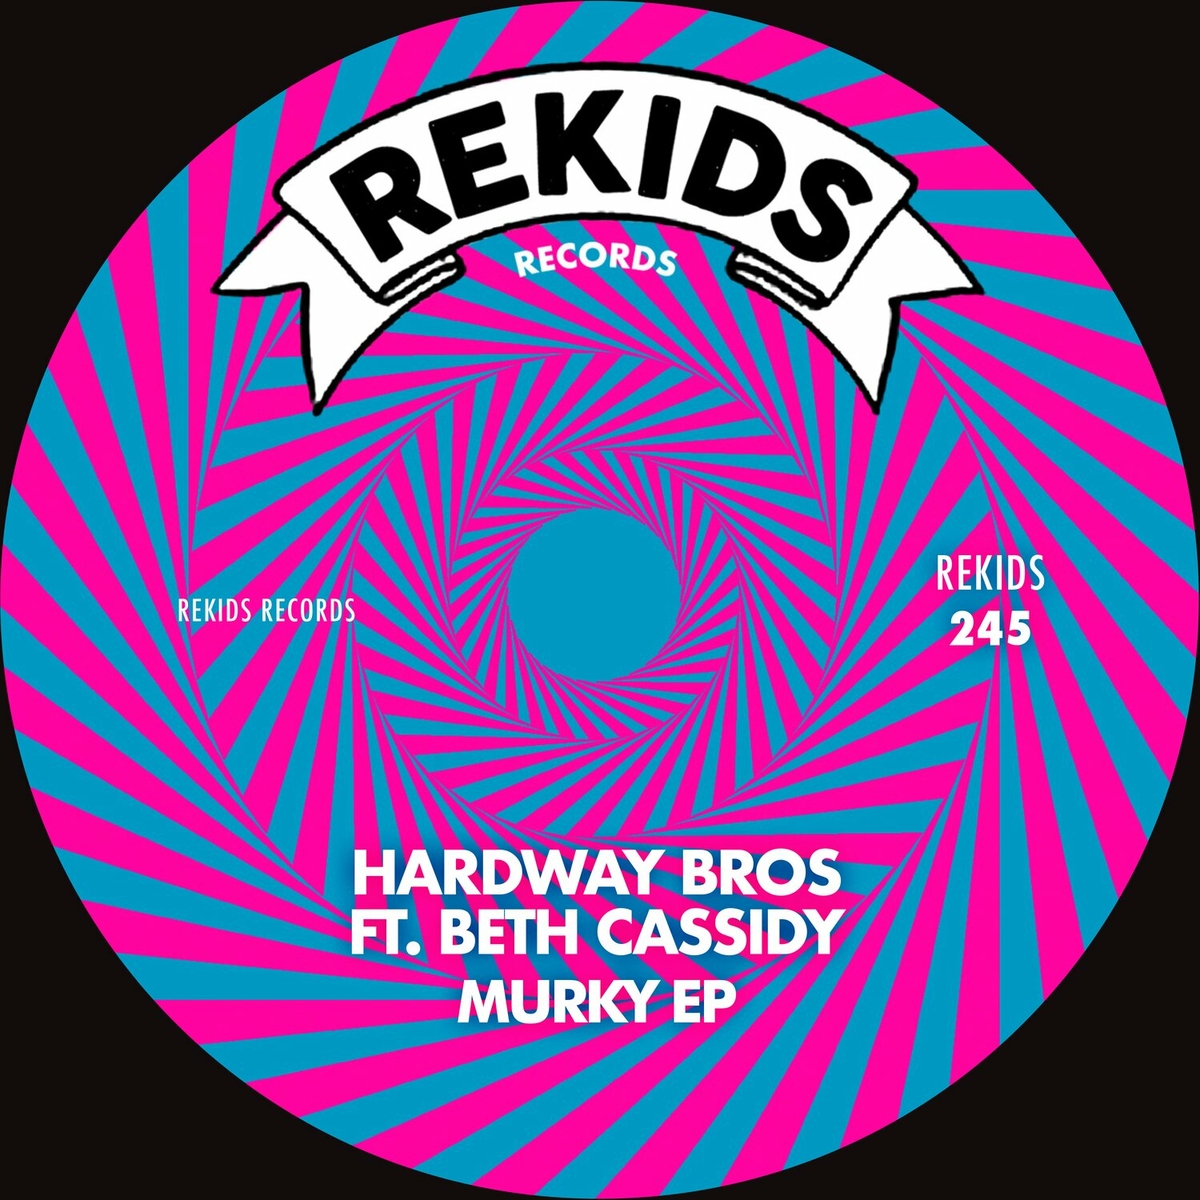 Hardway Bros, Beth cassidy - Murky EP on Rekids Ltd